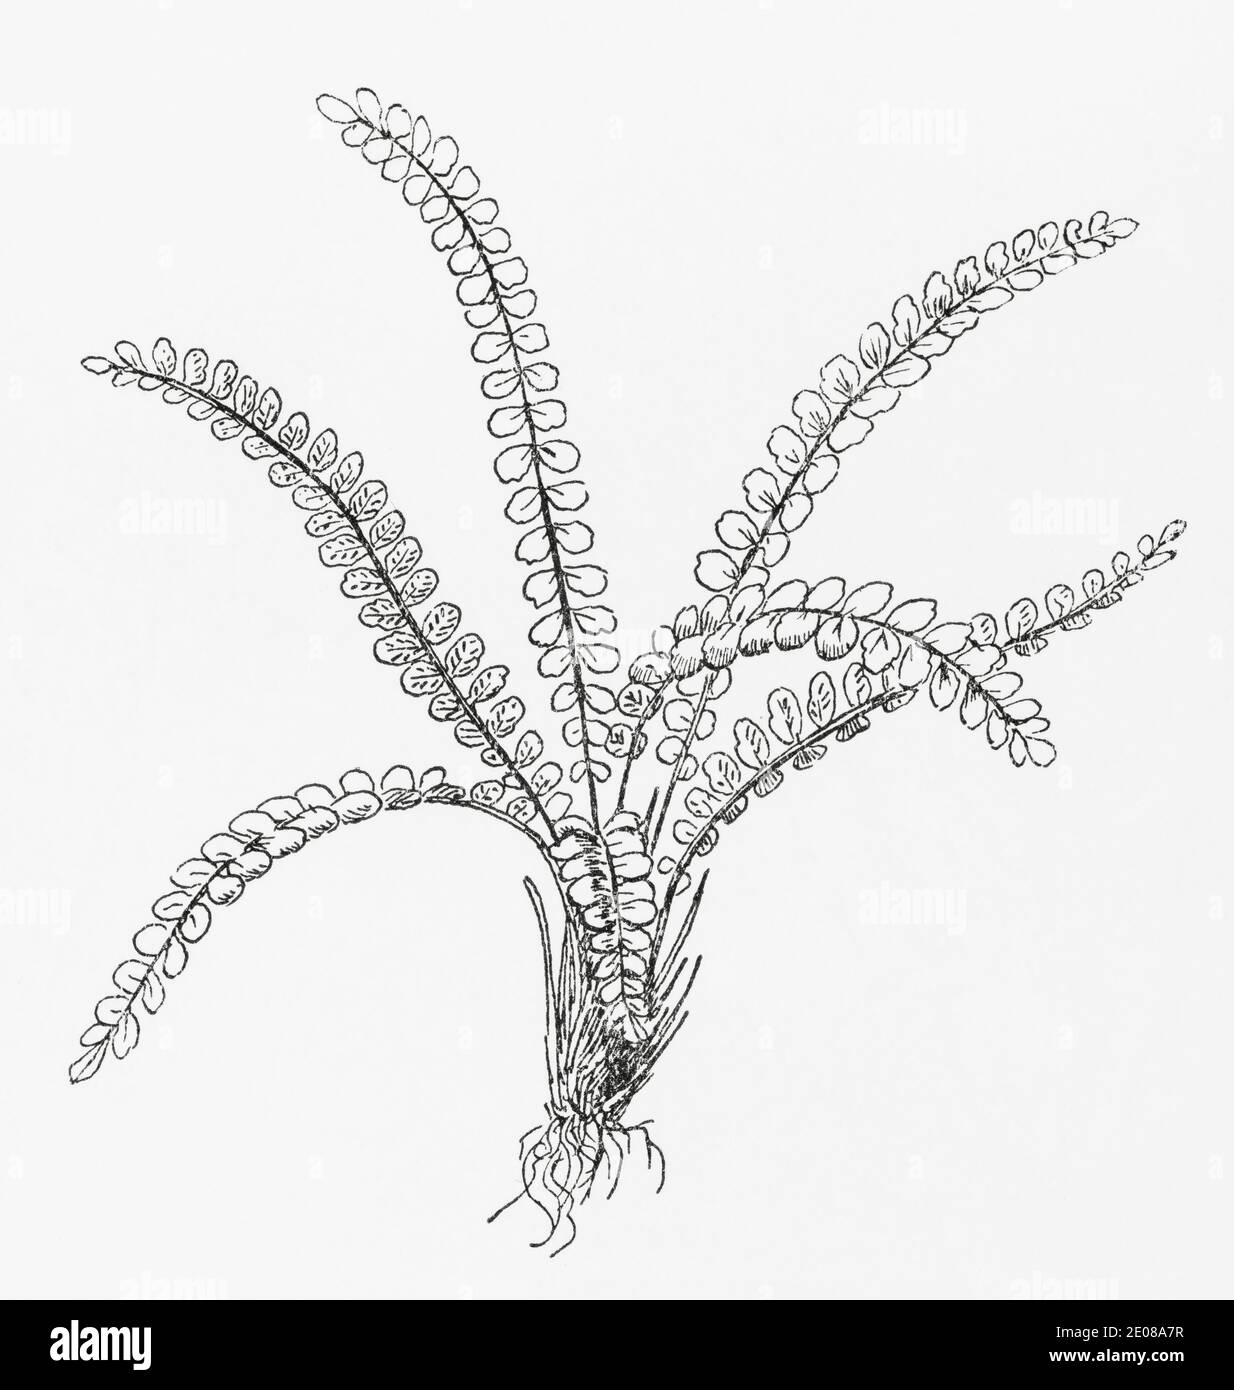 Old botanical illustration engraving of Maidenhair Spleenwort / Asplenium trichomanes. Traditional medicinal herbal plant. See Notes Stock Photo